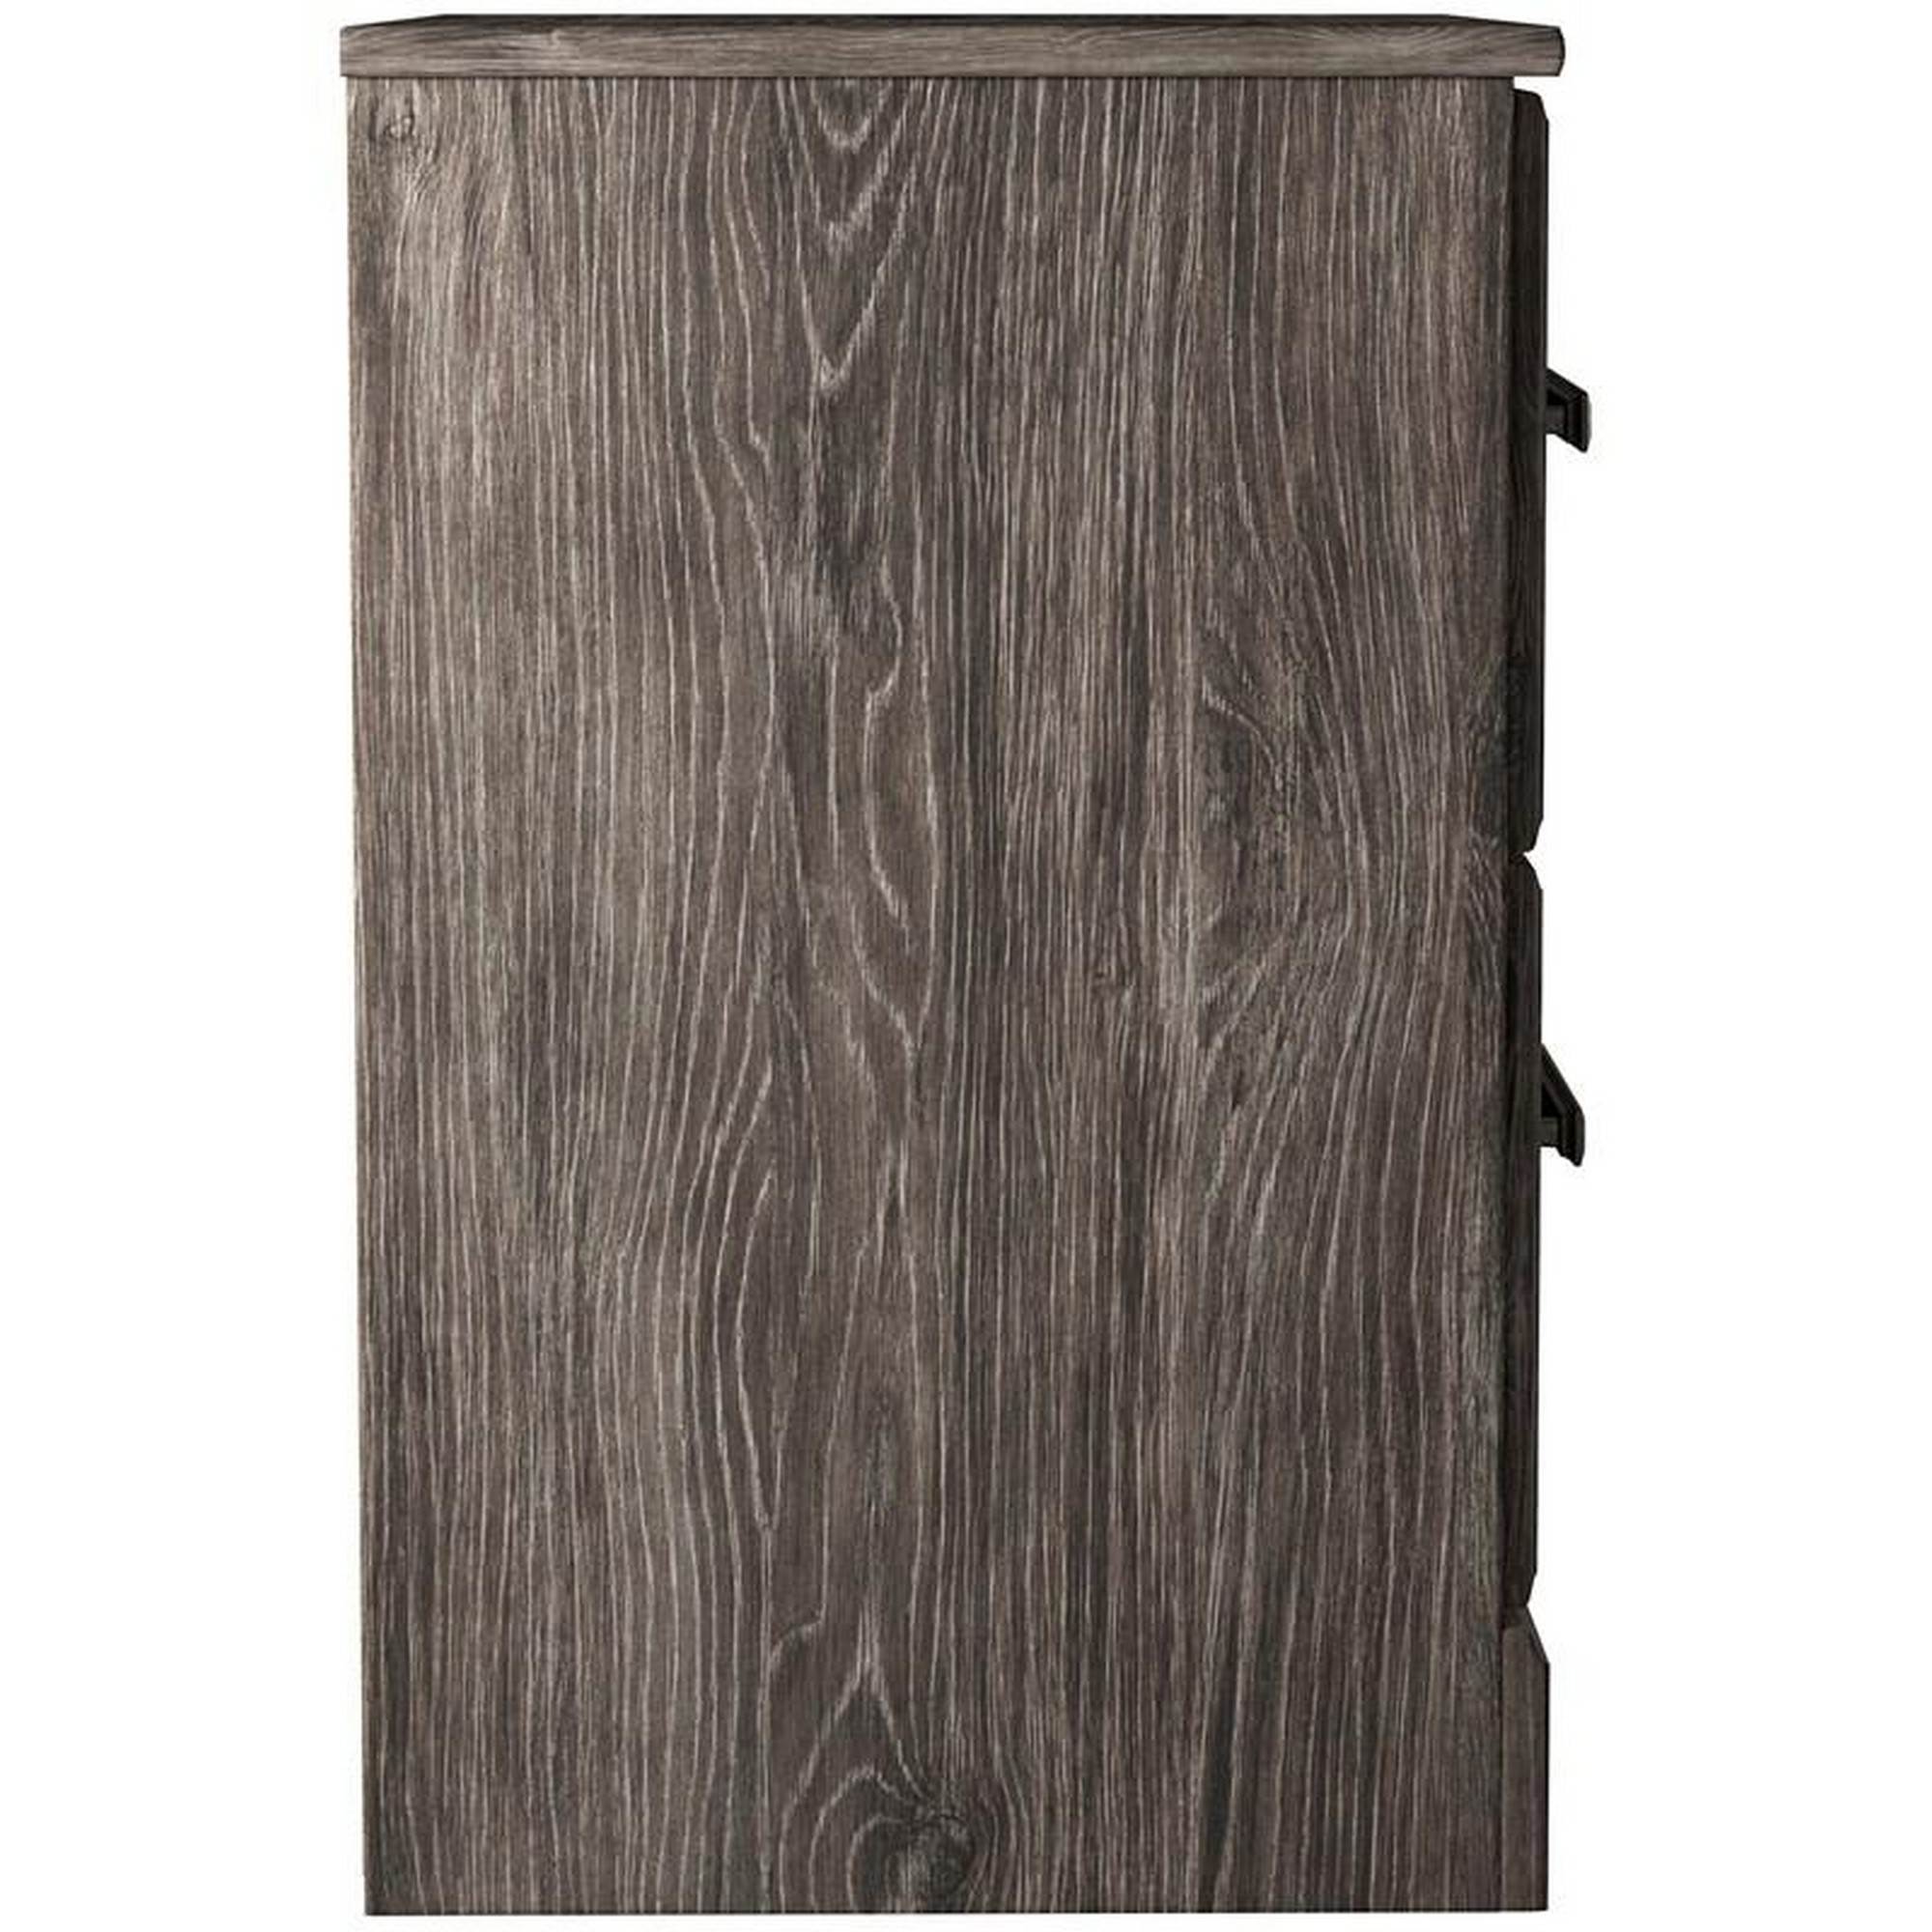 Lin 24 Inch Rustic Wood Nightstand, 2 Drawers, Gray Oak Grain Details- Saltoro Sherpi